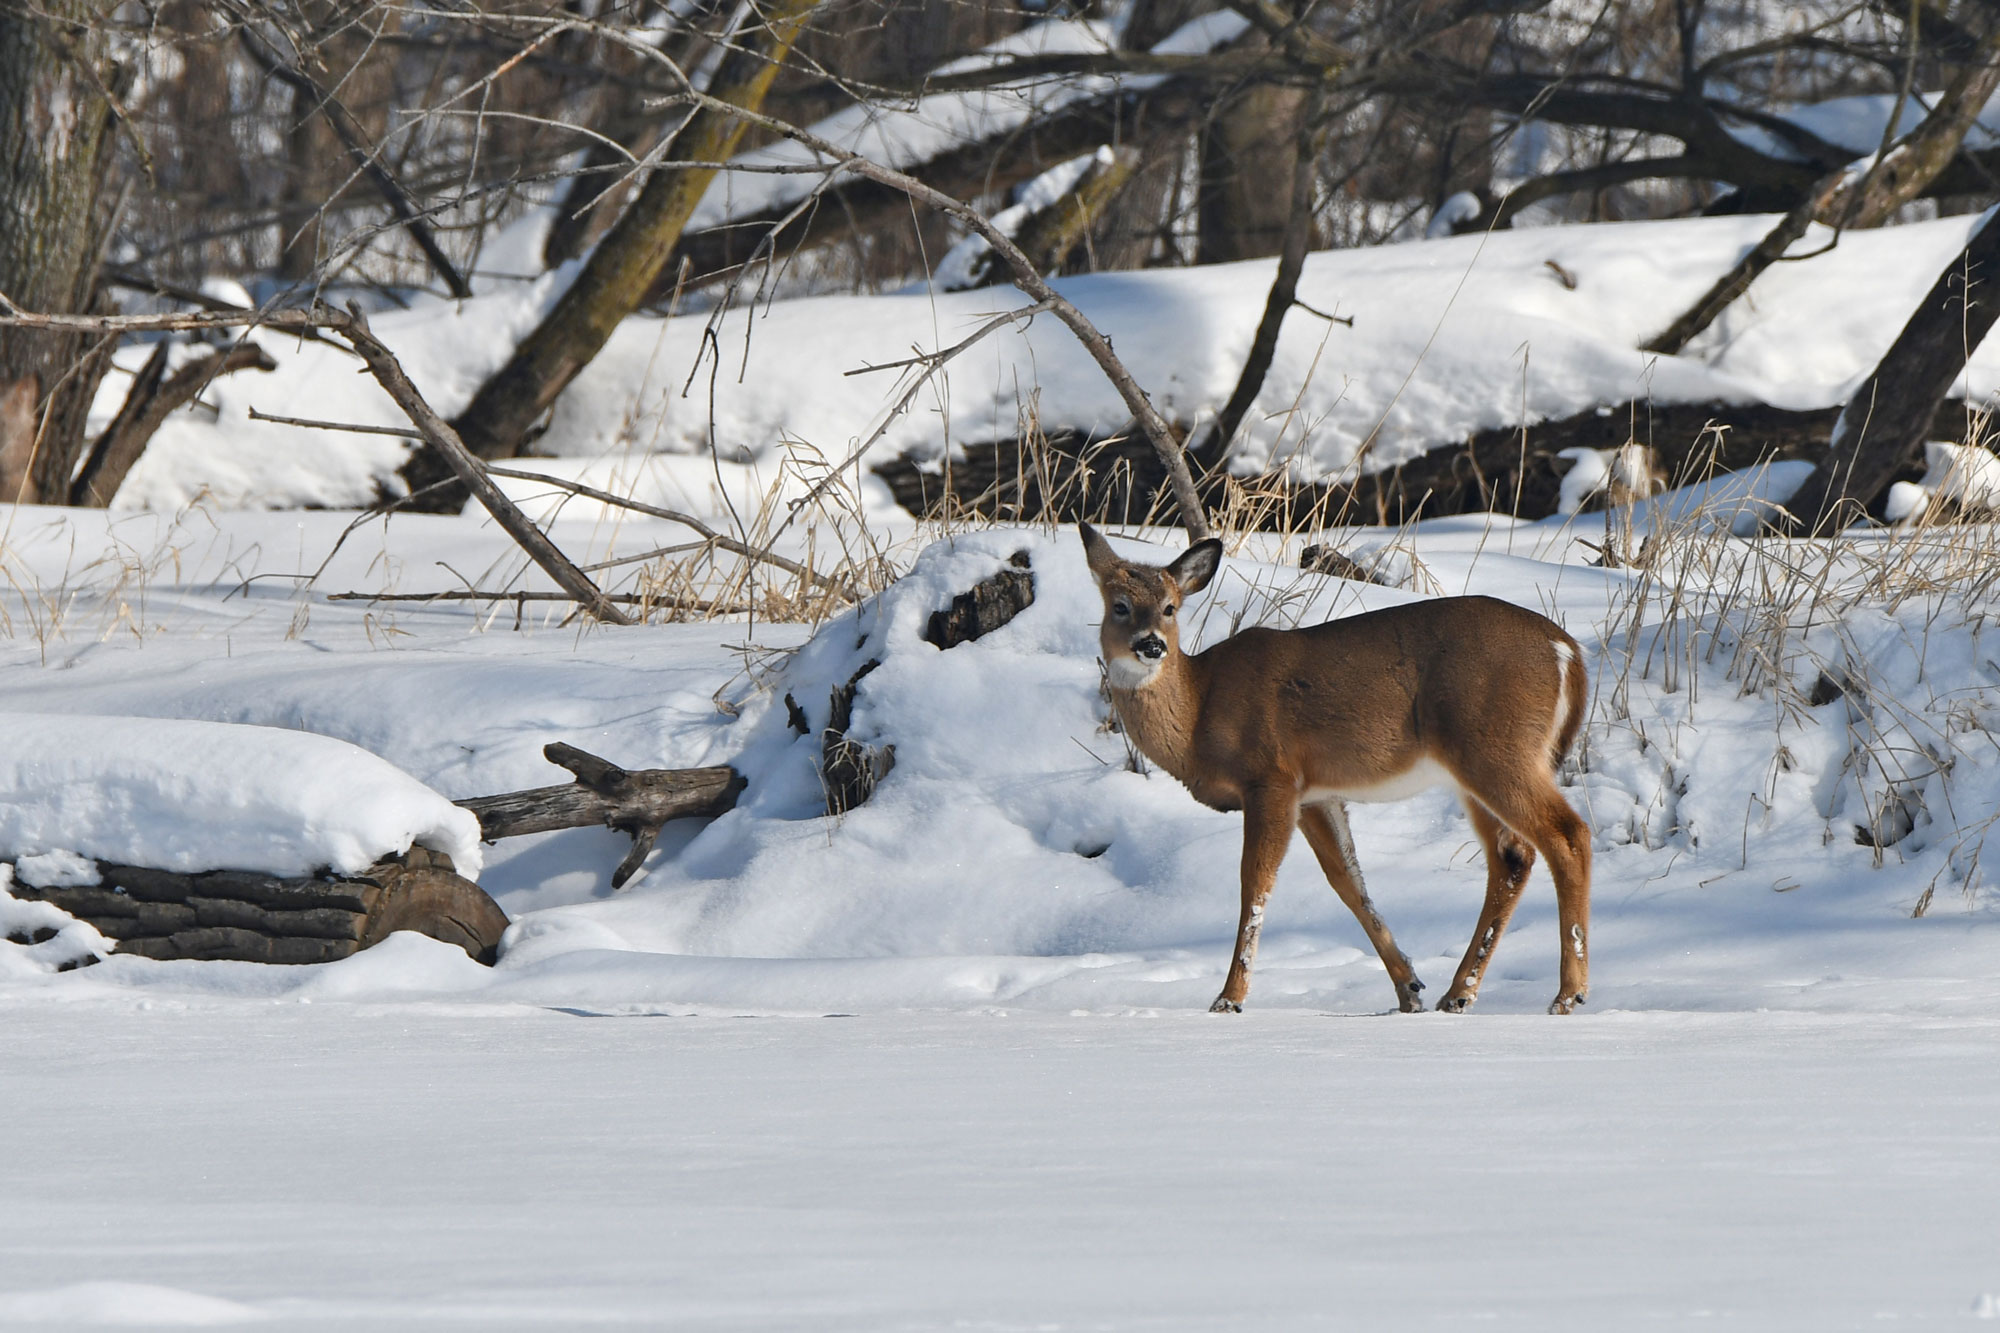 A deer in the snow.